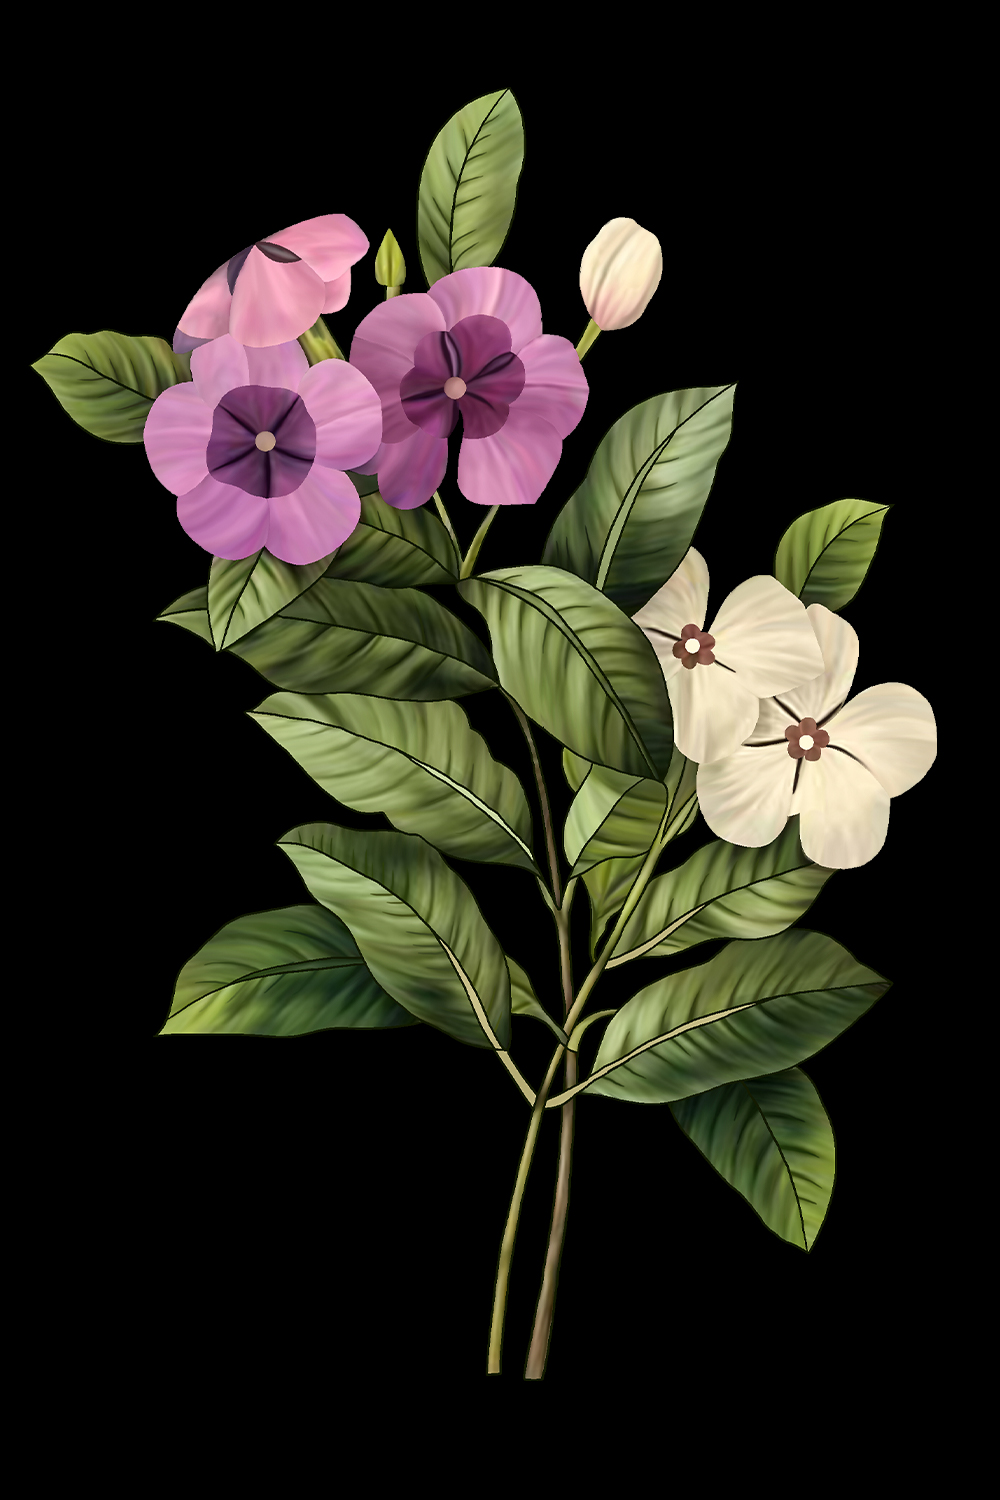 The high-quality digital floral design, Flowers transparent background high-resolution 300 DPI pinterest preview image.